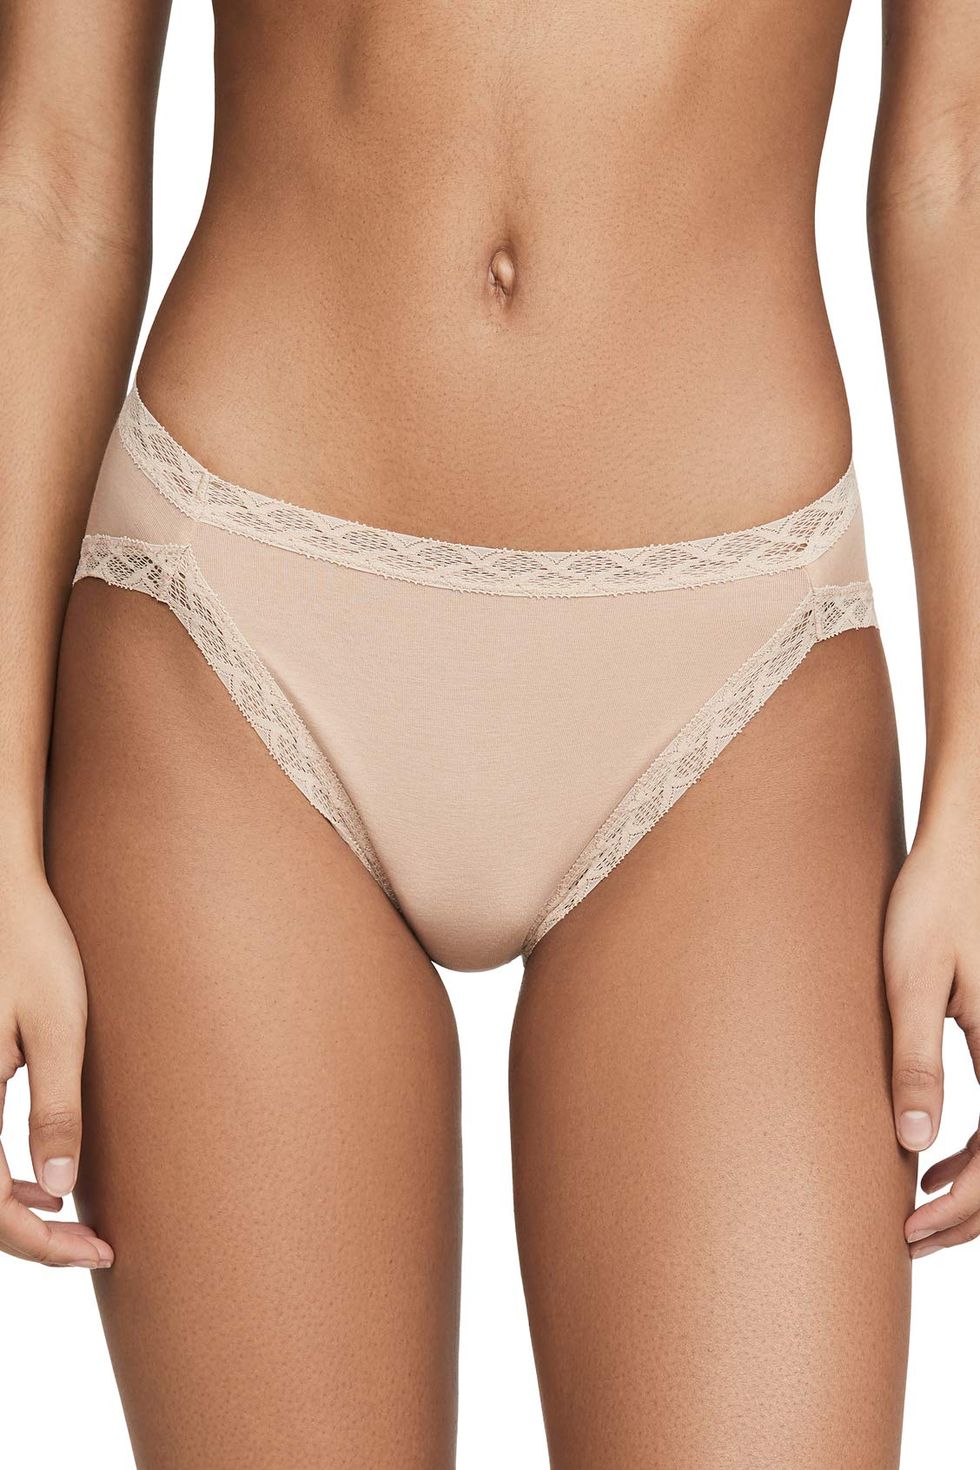 CAICJ98 Cotton Underwear For Women Womens Underwear Cotton Panties for Women  Underpants Briefs Hipster Lace Bikini Pink,XL 